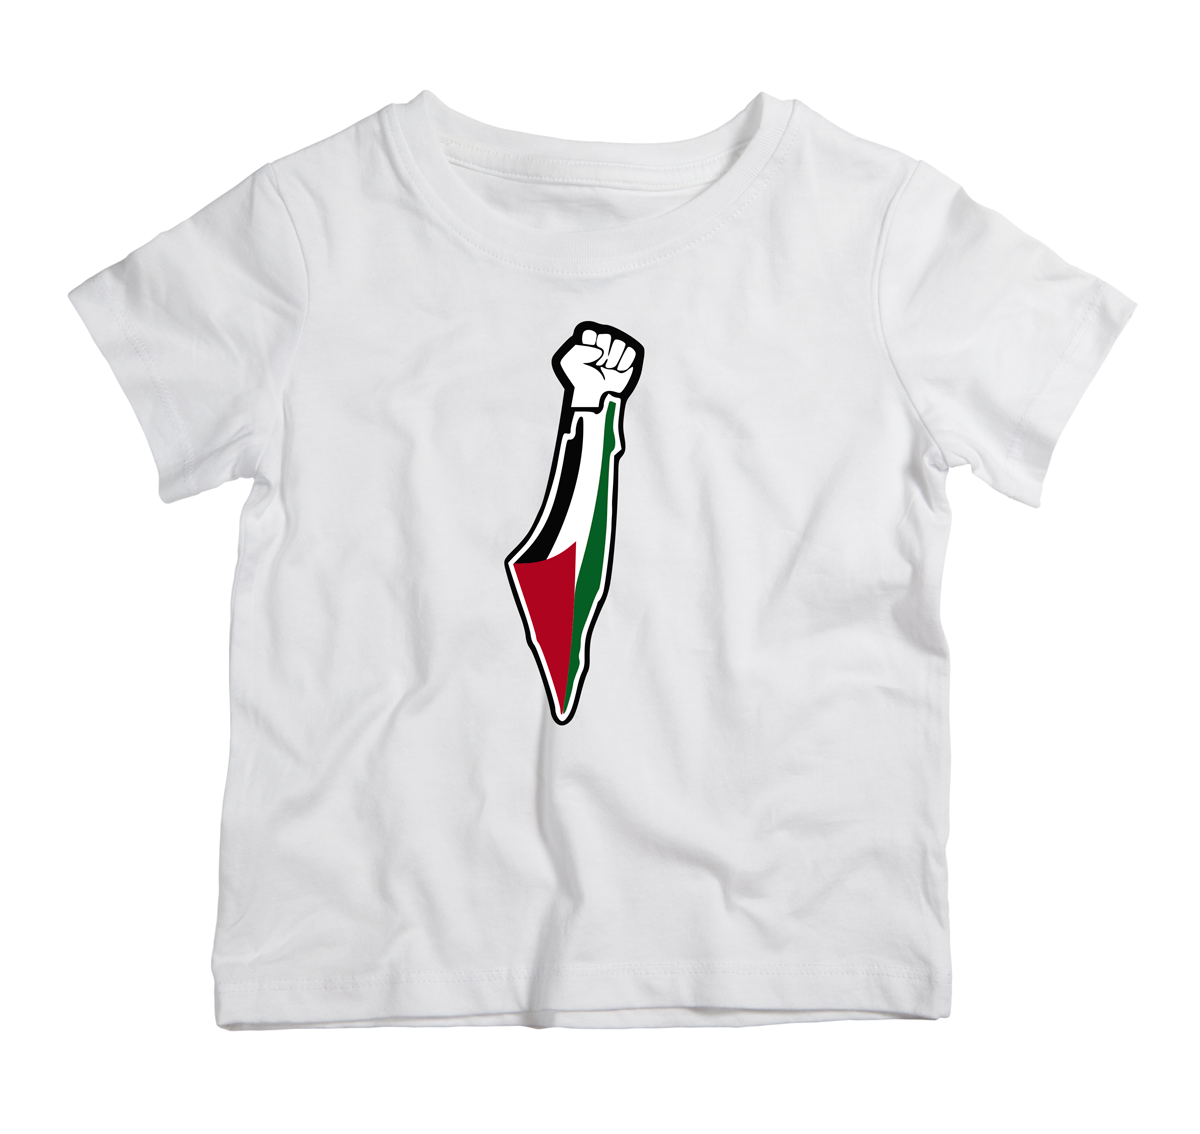 Palestinian Pride T-Shirt: Stylish and meaningful design celebrating heritage.